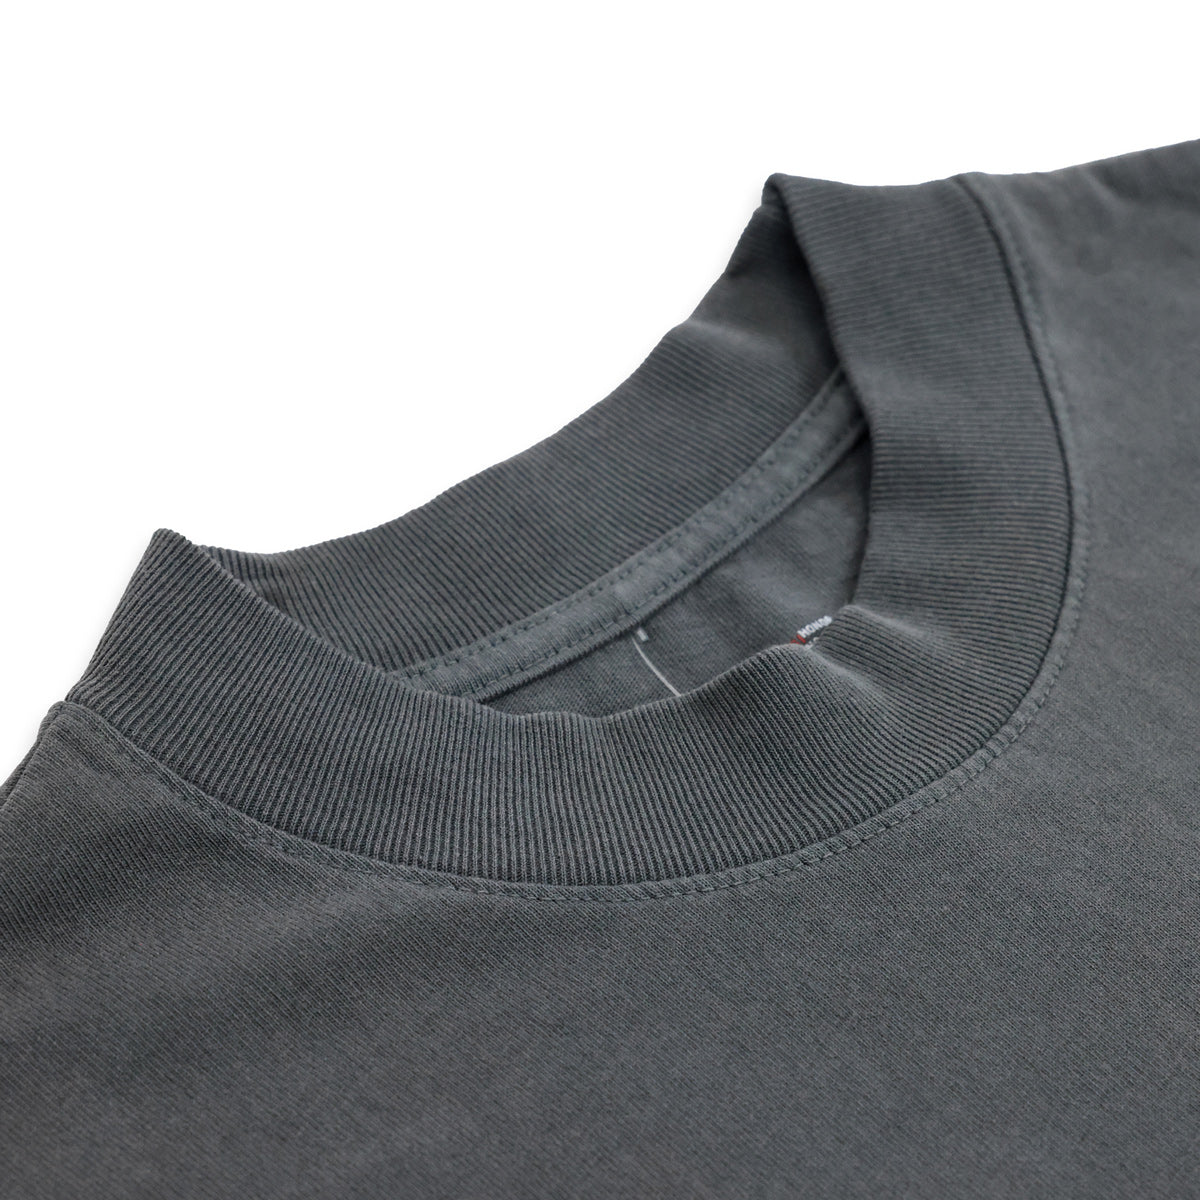 The Marathon Vintage Embroidered Victory T-Shirt - Vintage Grey/Black - Collar